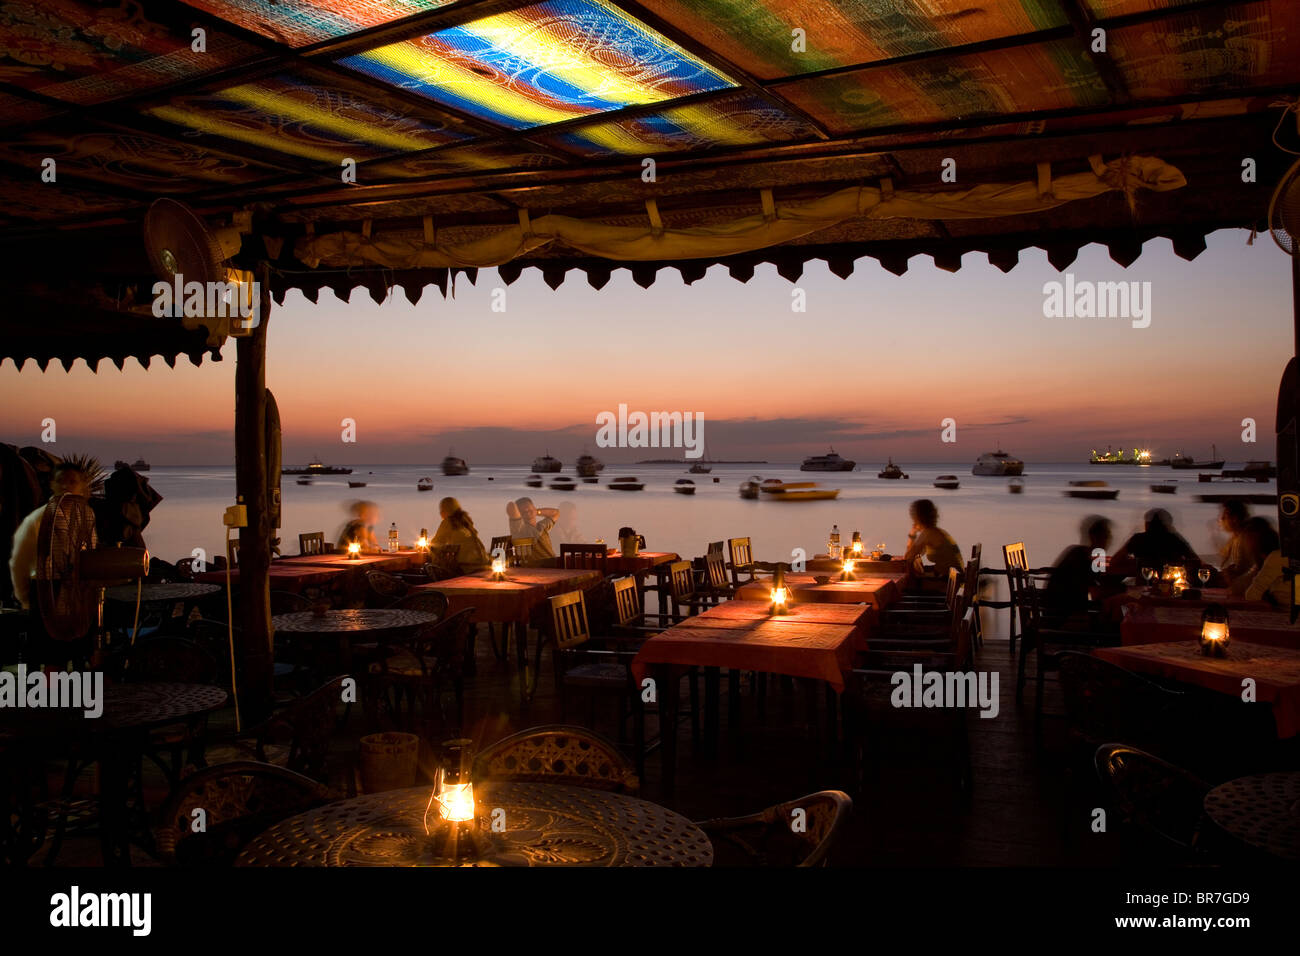 An outdoor restaurant at dusk in Zanzibar. Stock Photo